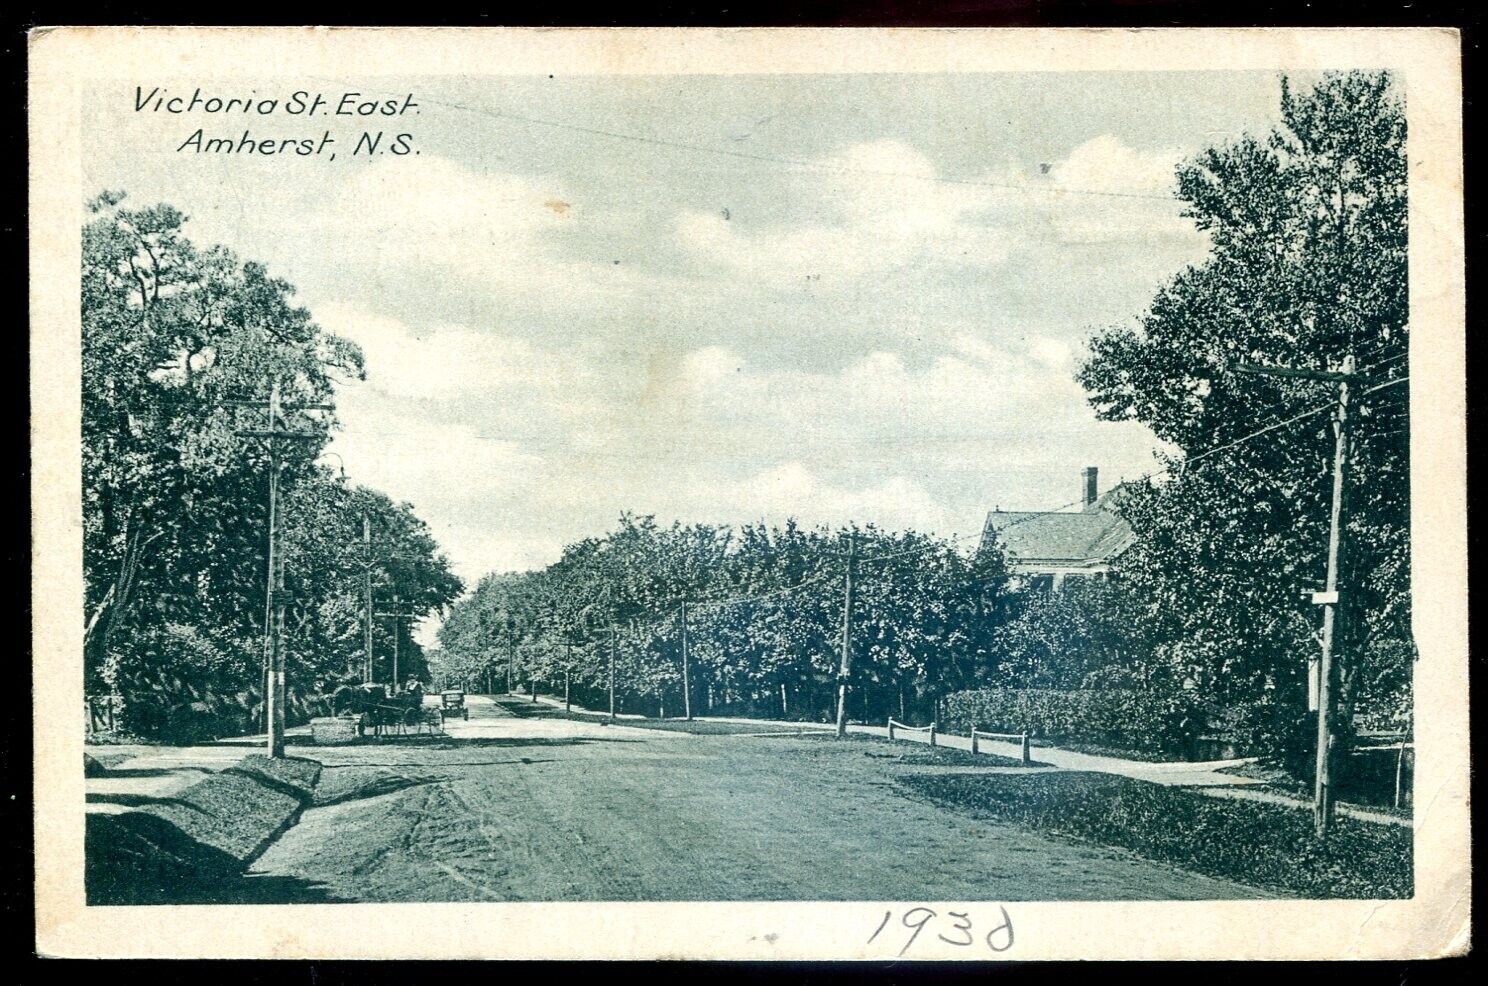 AMHERST Nova Scotia Postcard 1930 Victoria Street East by PECO